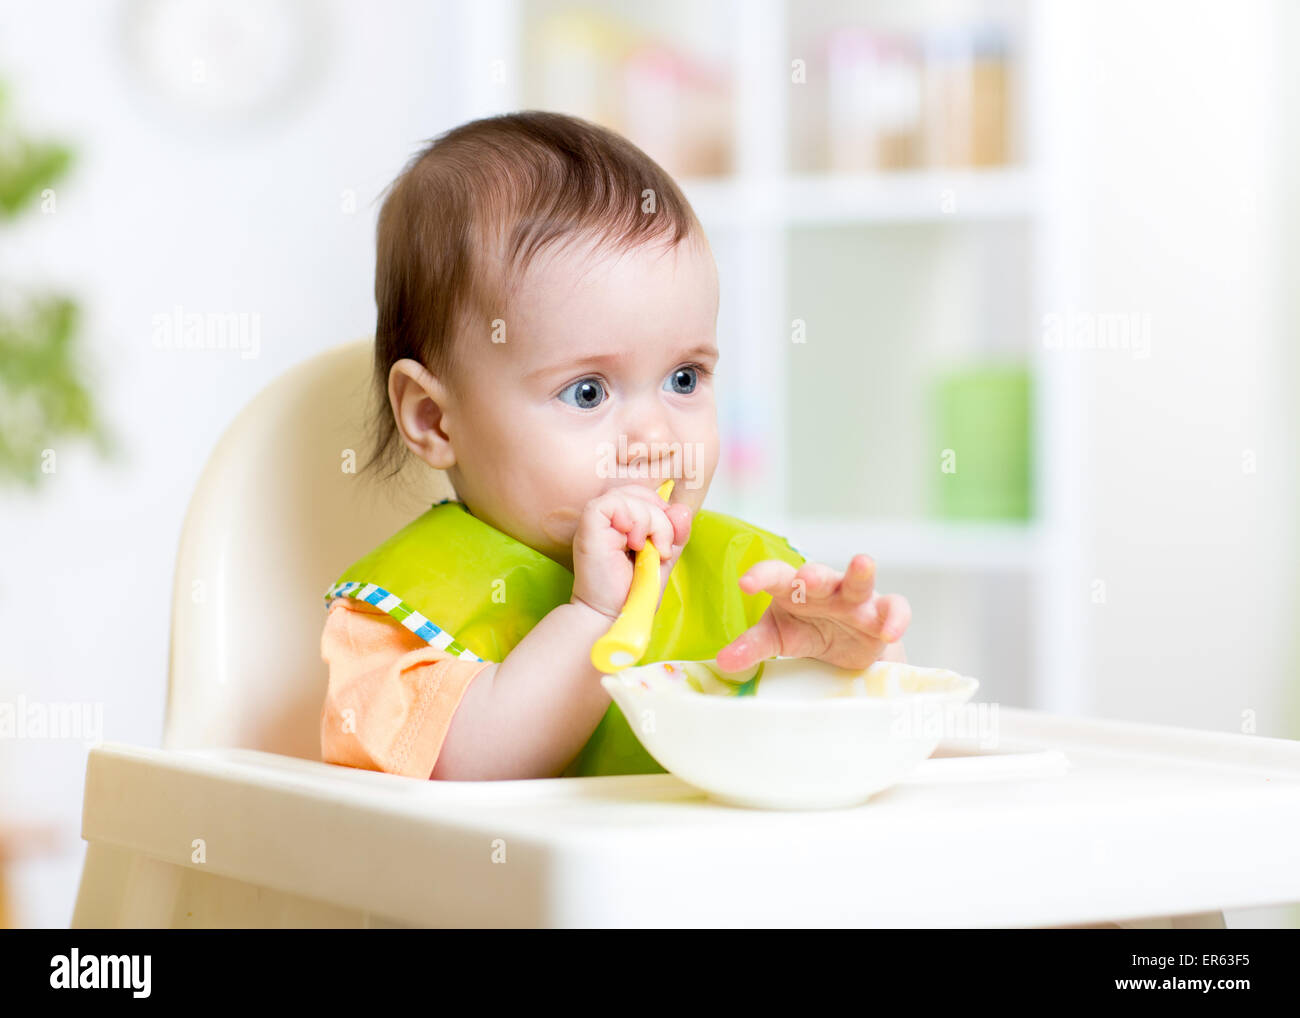 Allegro happy baby bambino seduto in poltrona con un cucchiaio Foto Stock